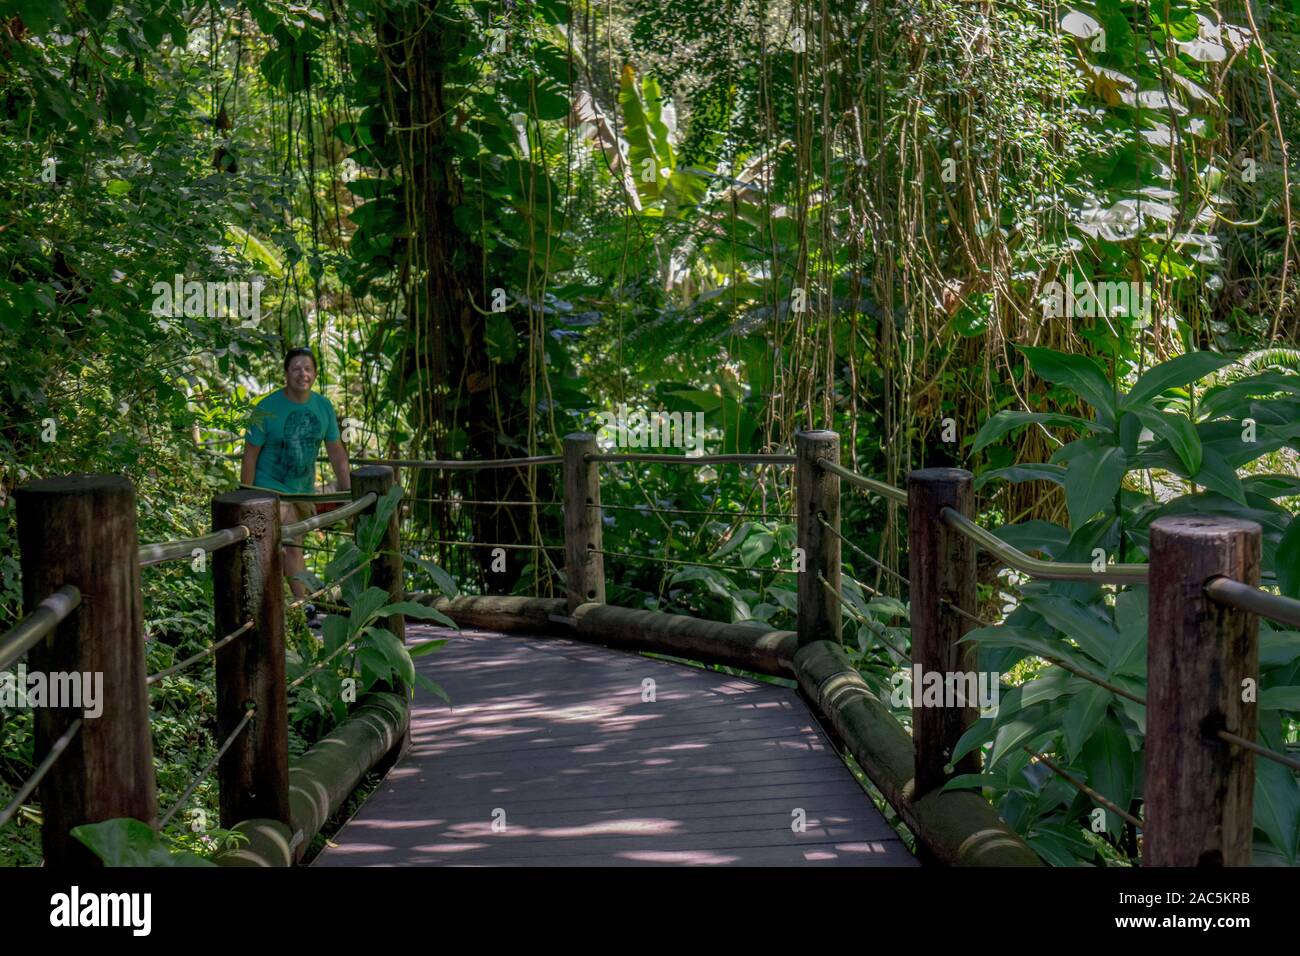 A tourist follows the boardwalk through the rain forest at Hawaii Tropical Botanical Garden, Papa'ikou, Big Island of Hawaiʻi. Stock Photo